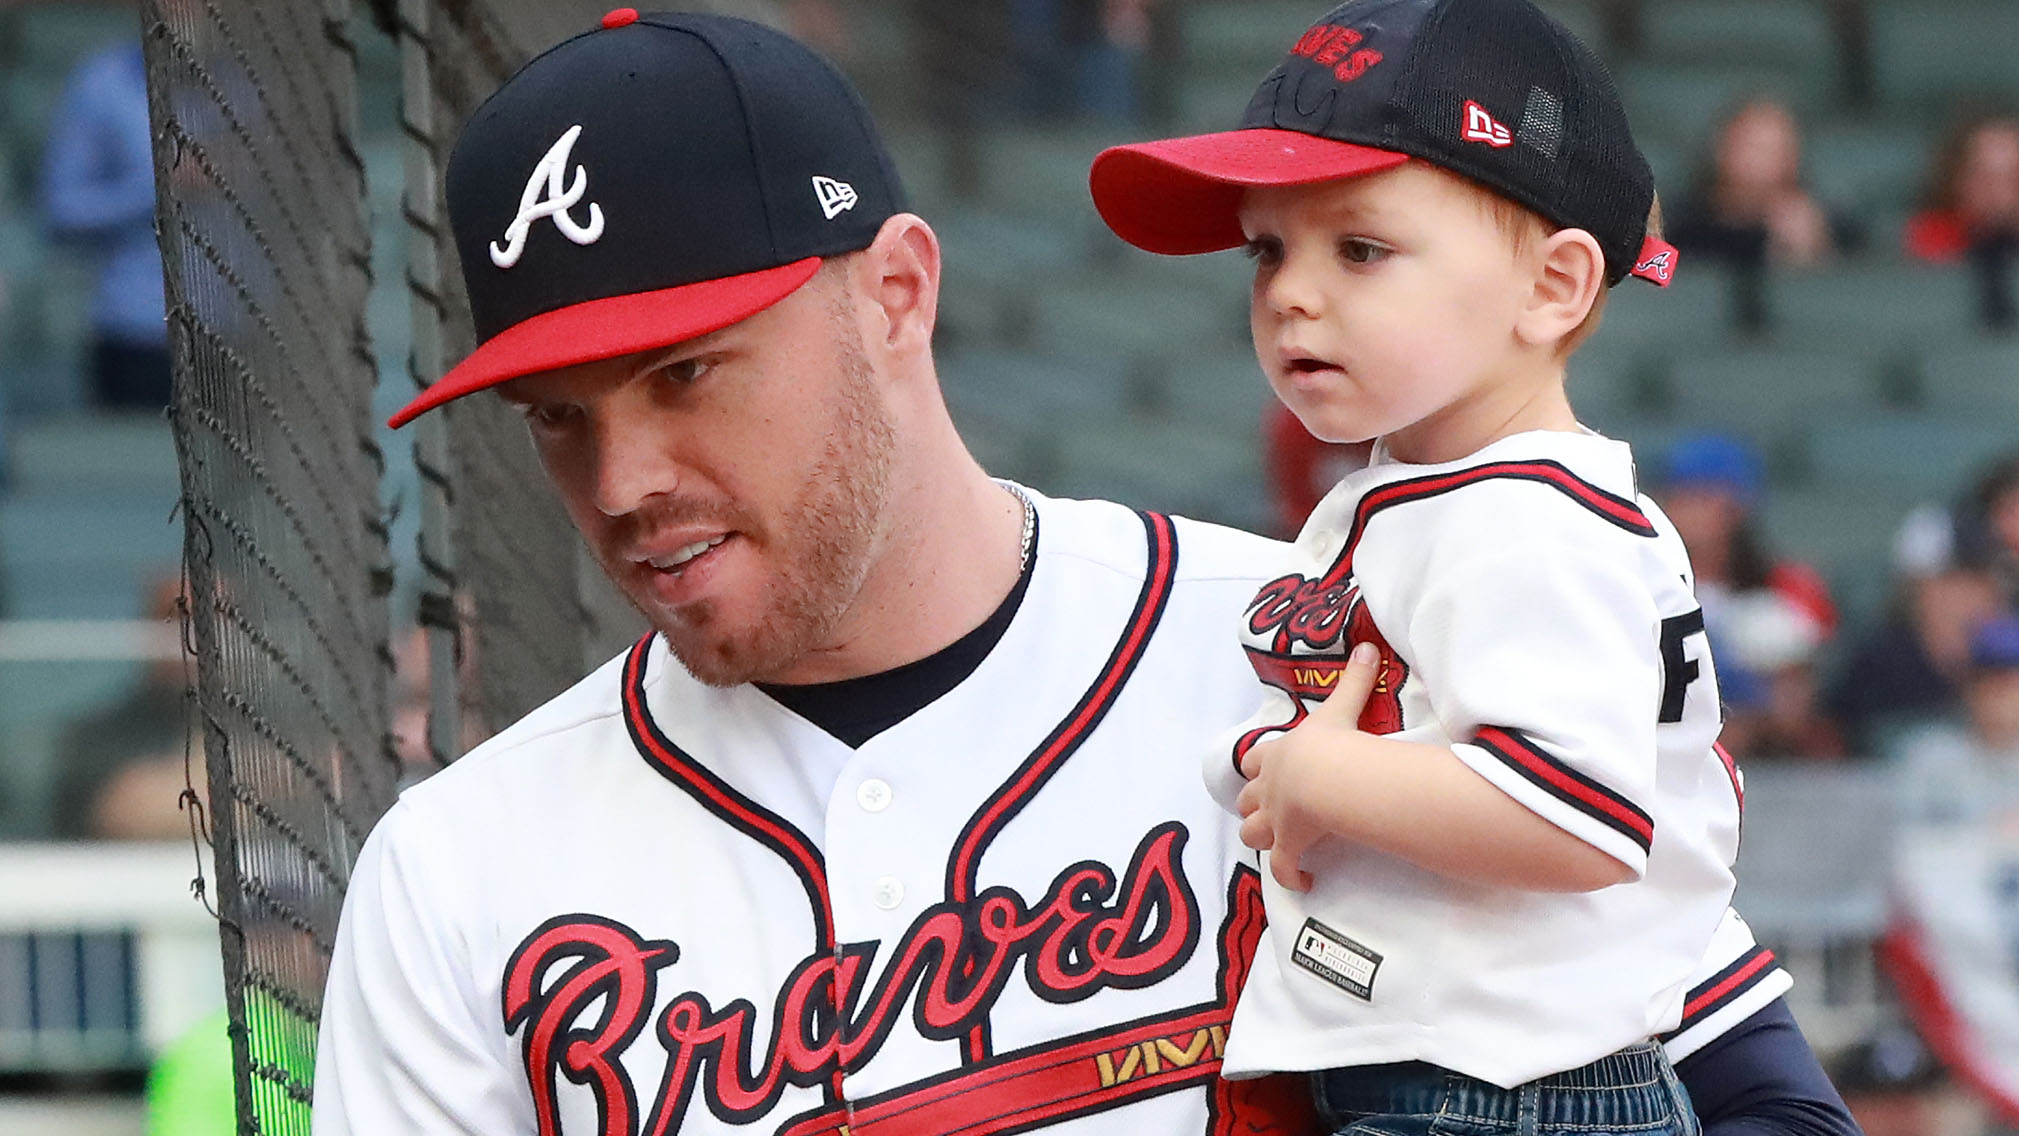 WATCH: Freeman crushes son's pitch in 'backyard baseball